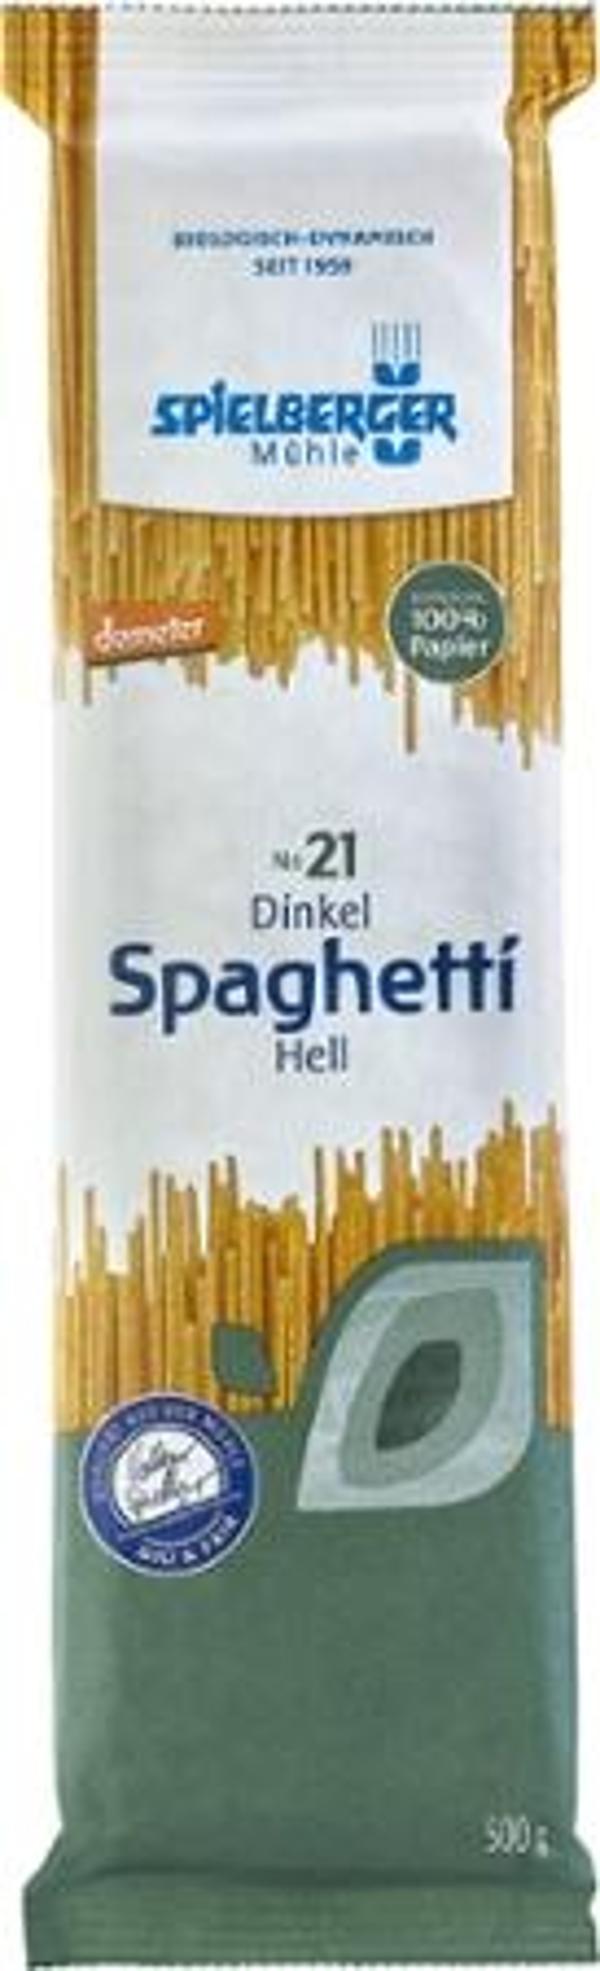 Produktfoto zu Dinkel Spaghetti hell